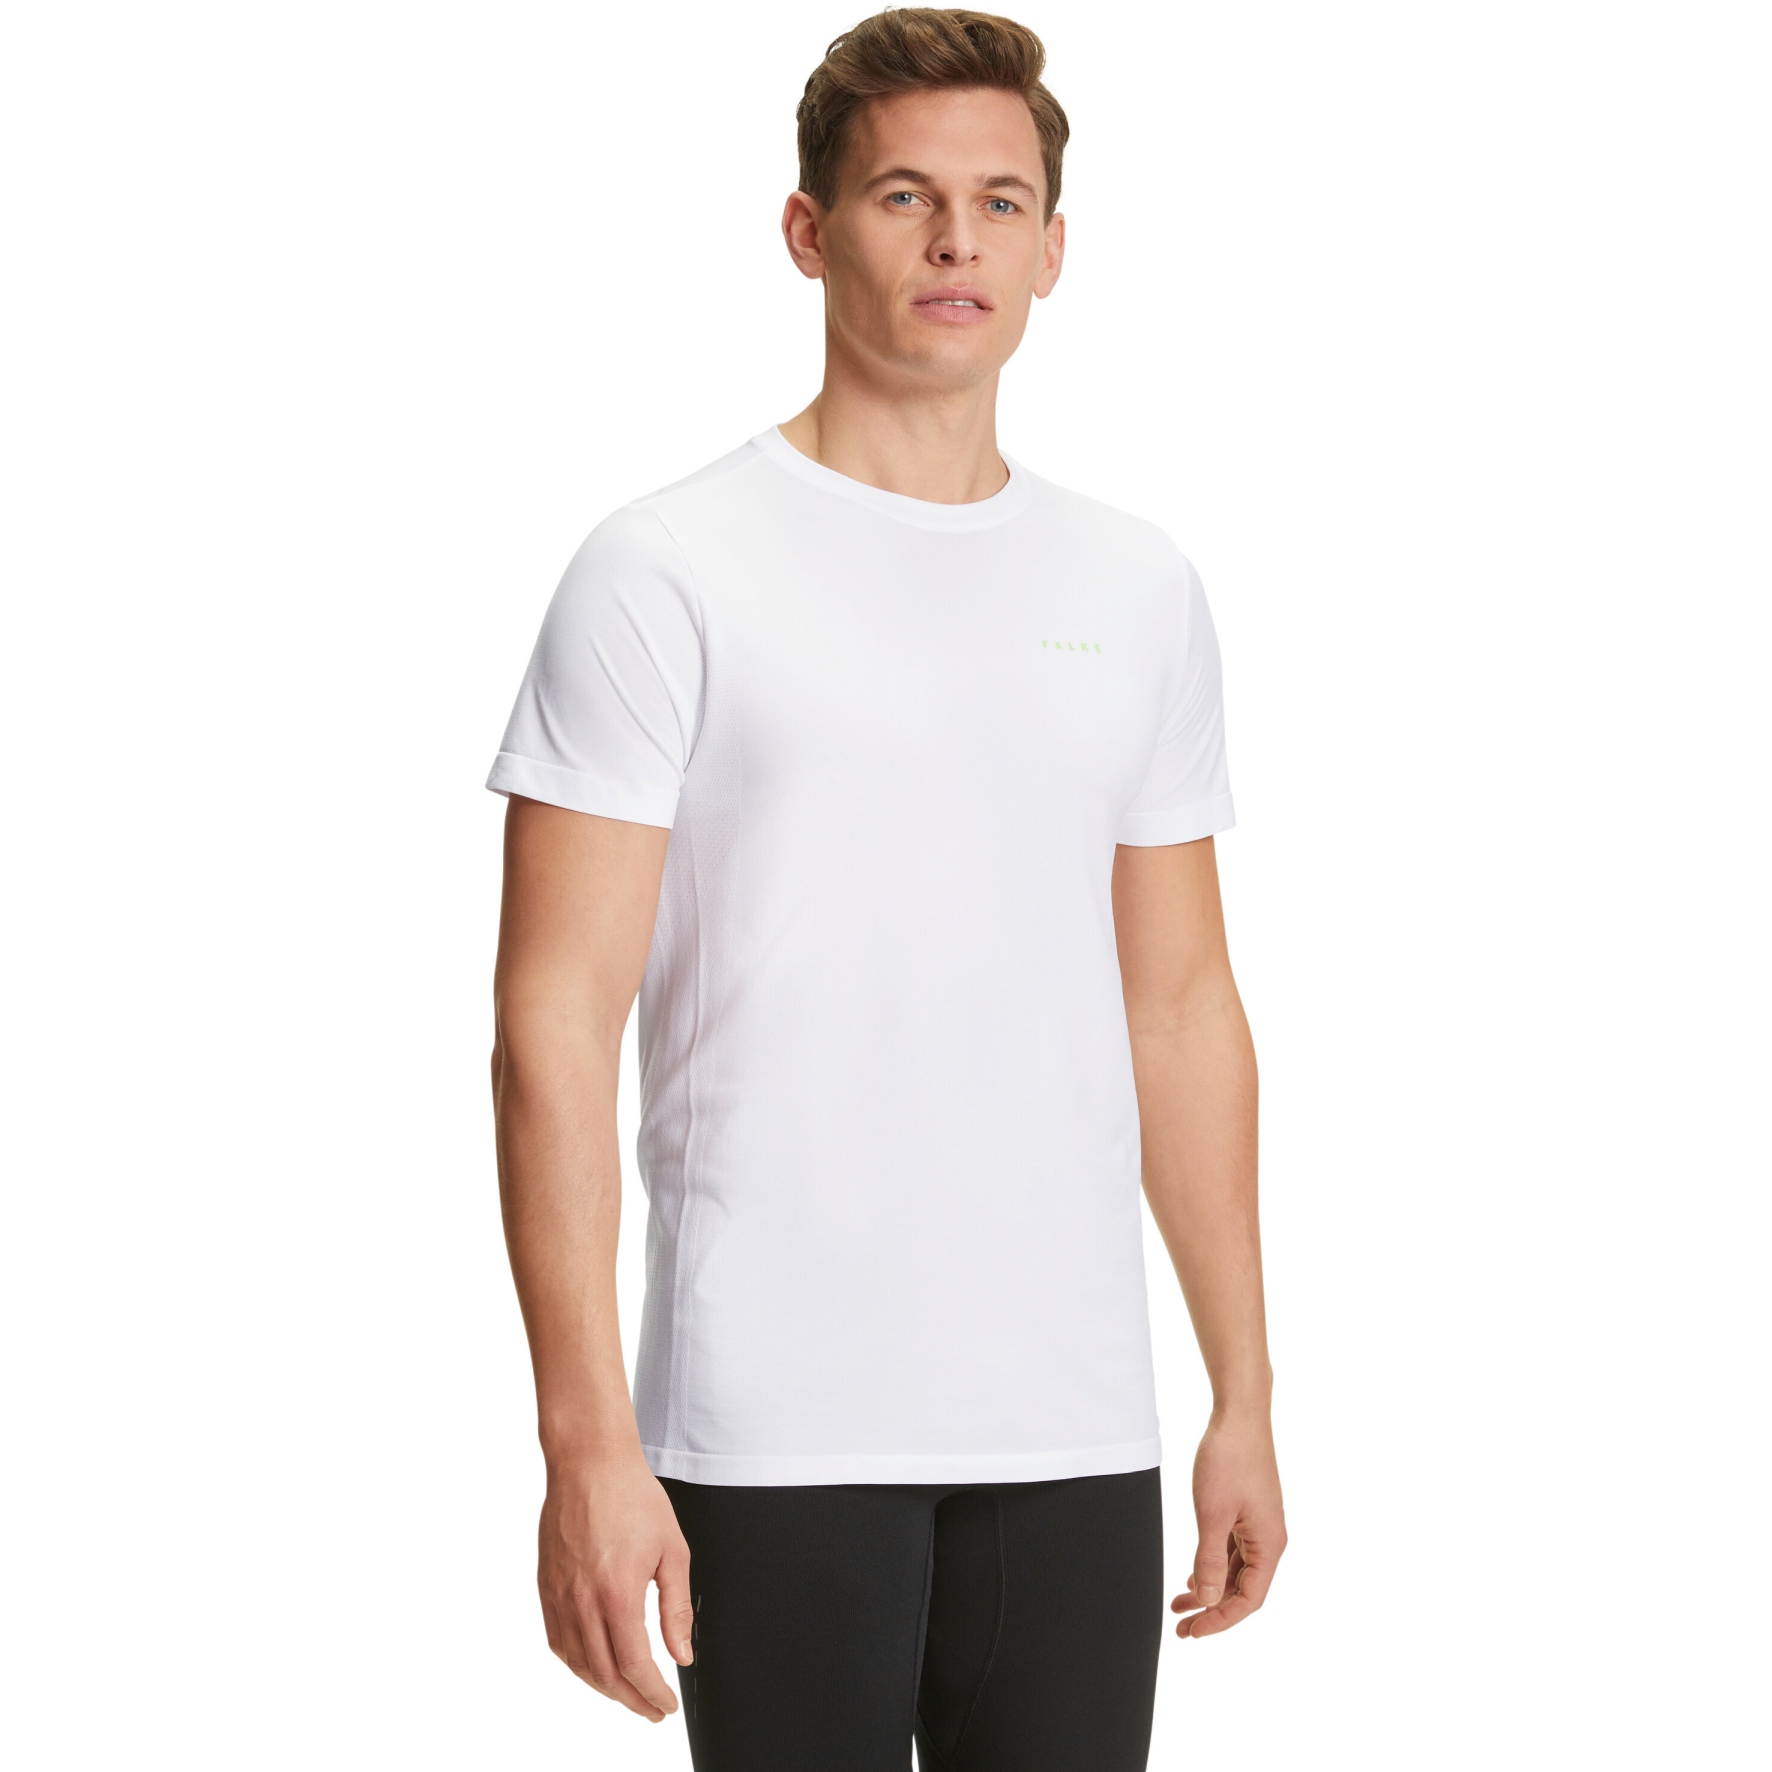 Image of Falke RU T-Shirt 2 - white 2860